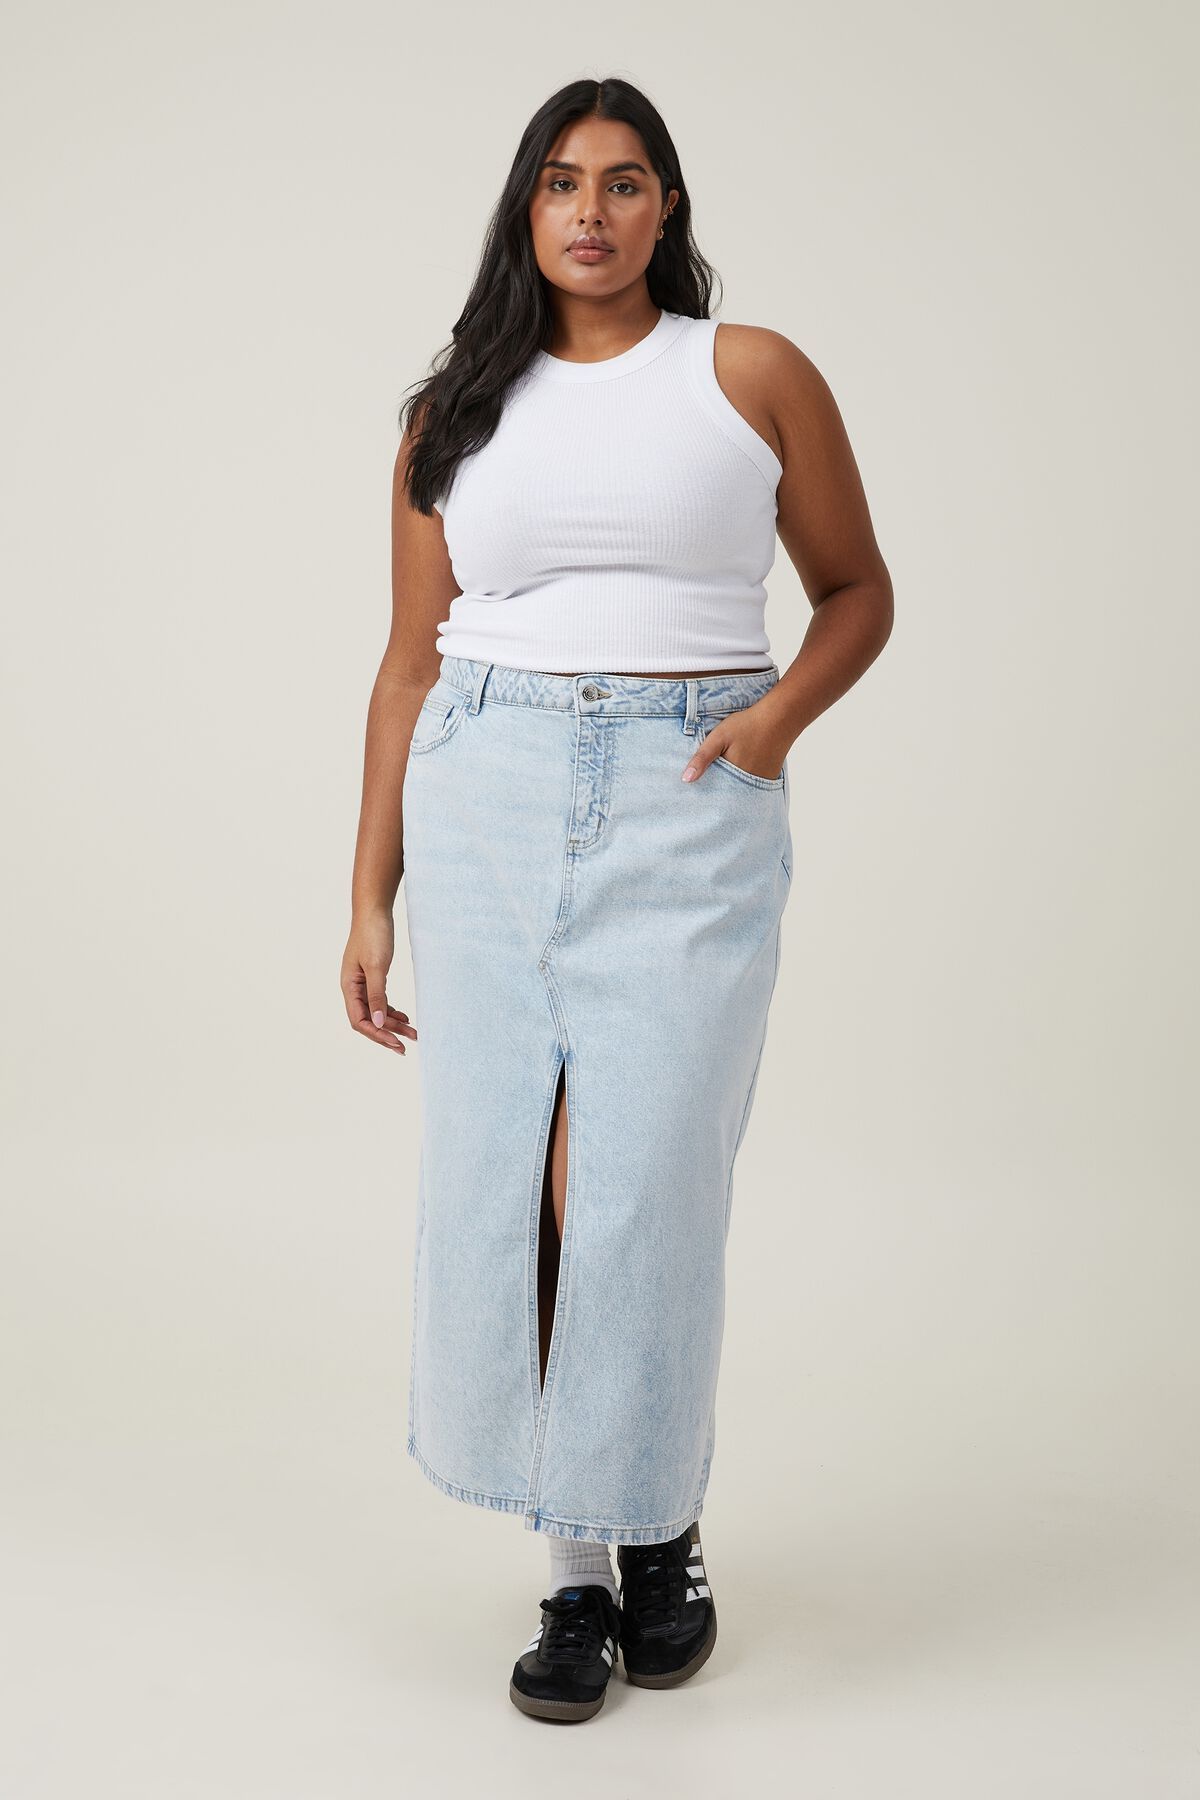 Bailey Denim Maxi Skirt | Cotton On (ANZ)